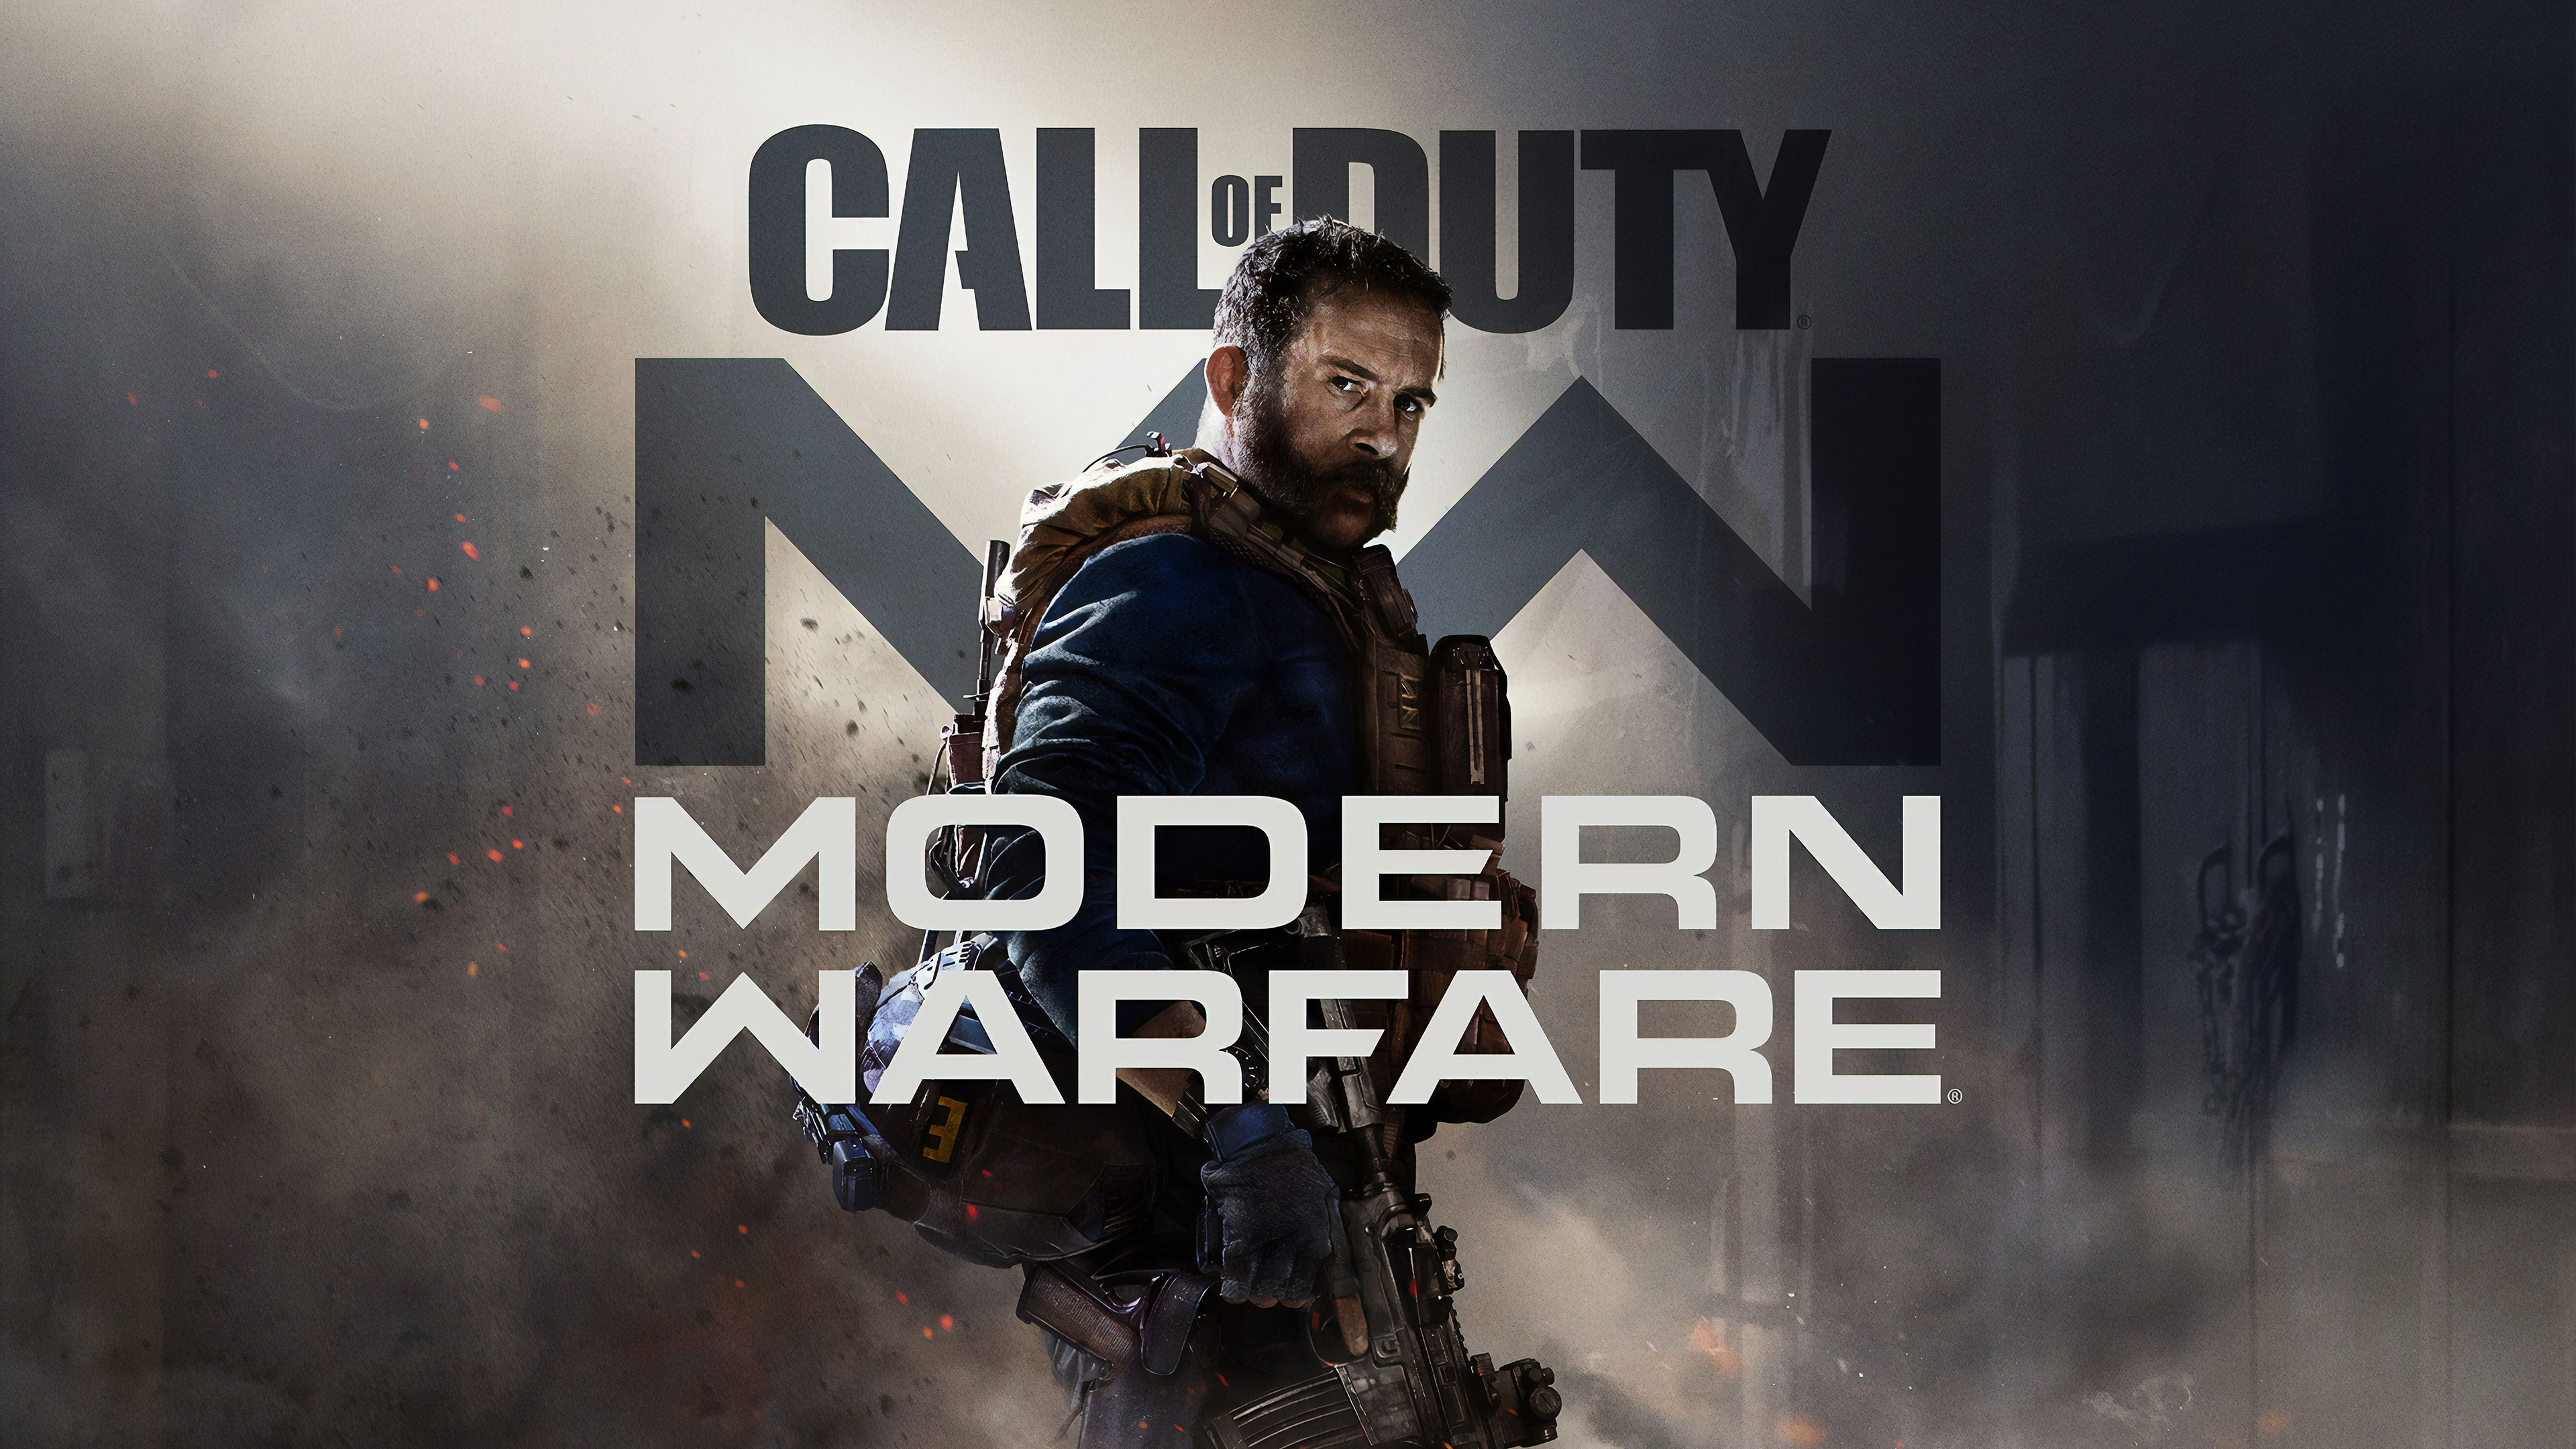 Call of Duty Modern Warfare, Call of Duty 4 Modern Warfare, Movie, pc Game, Shooter Game. Wallpaper in 3840x2160 Resolution